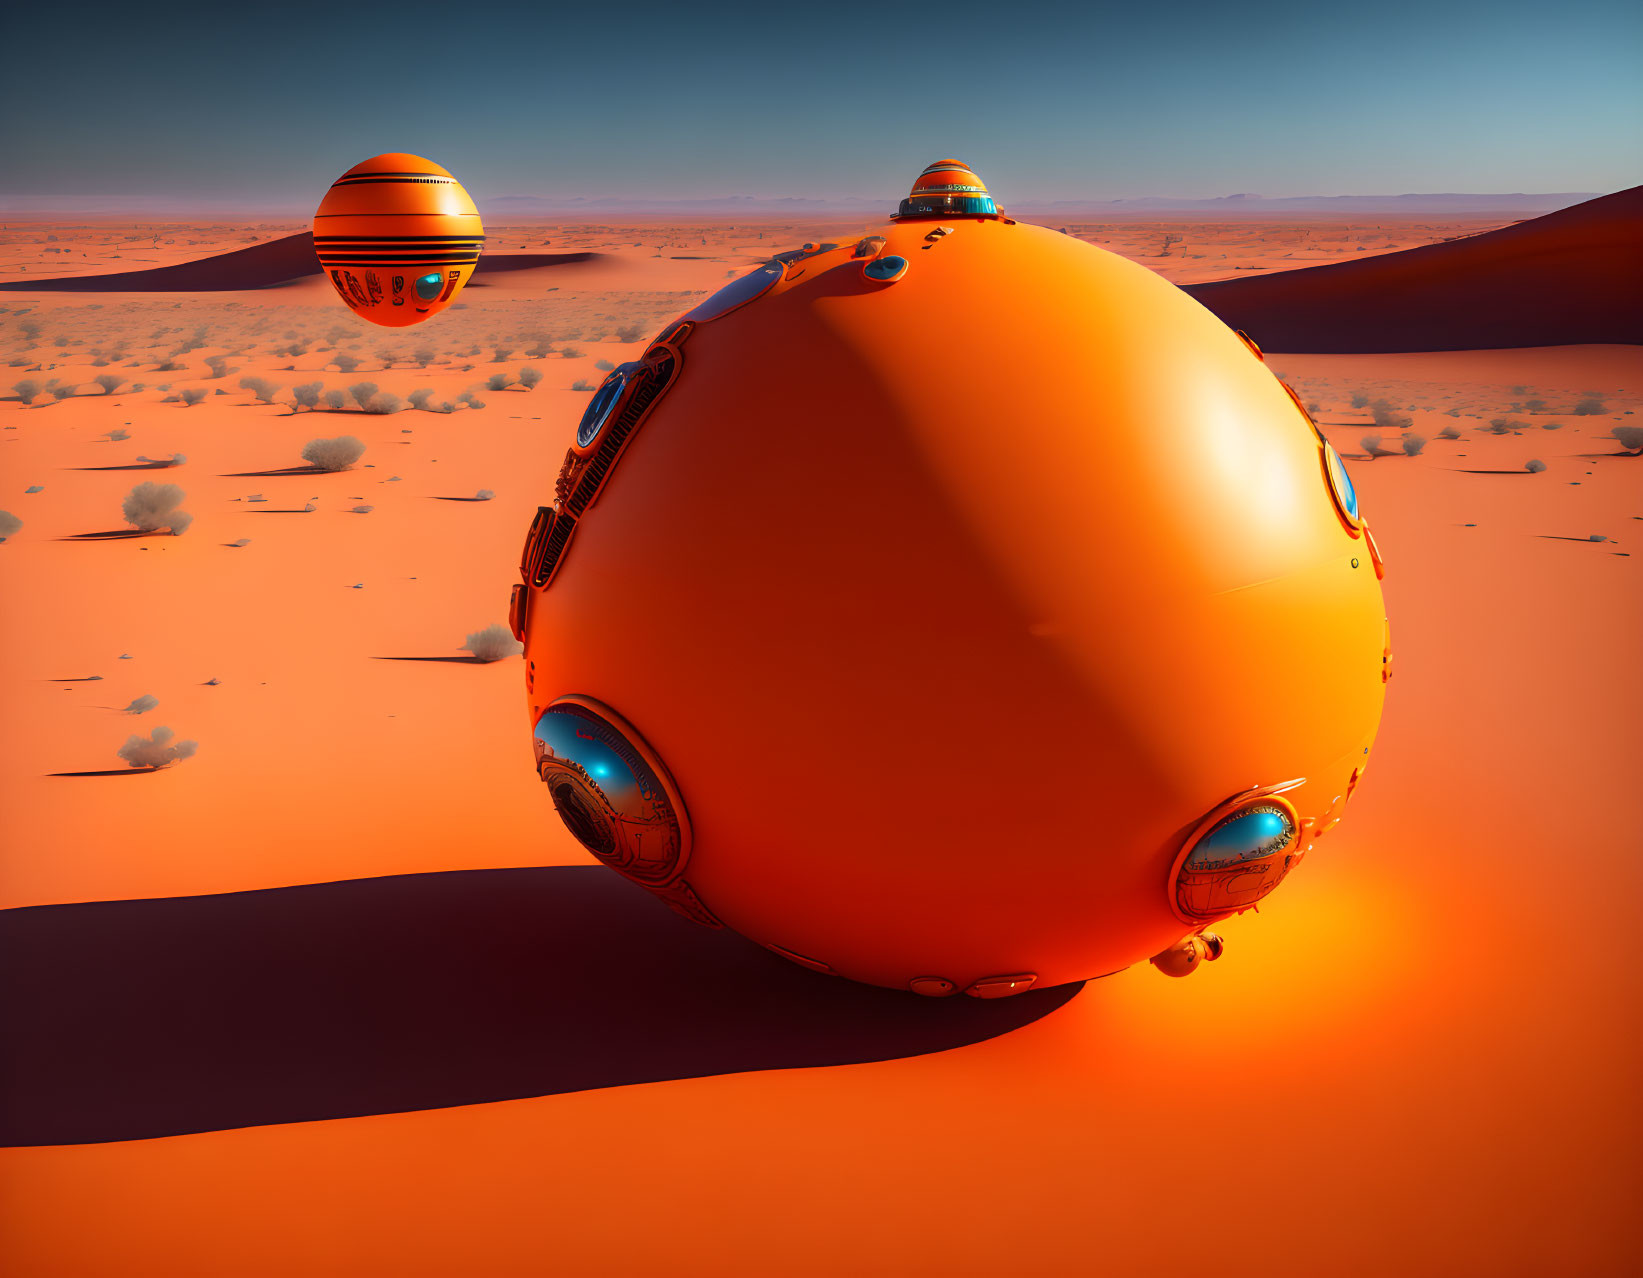 Futuristic spherical orange pods in desert landscape